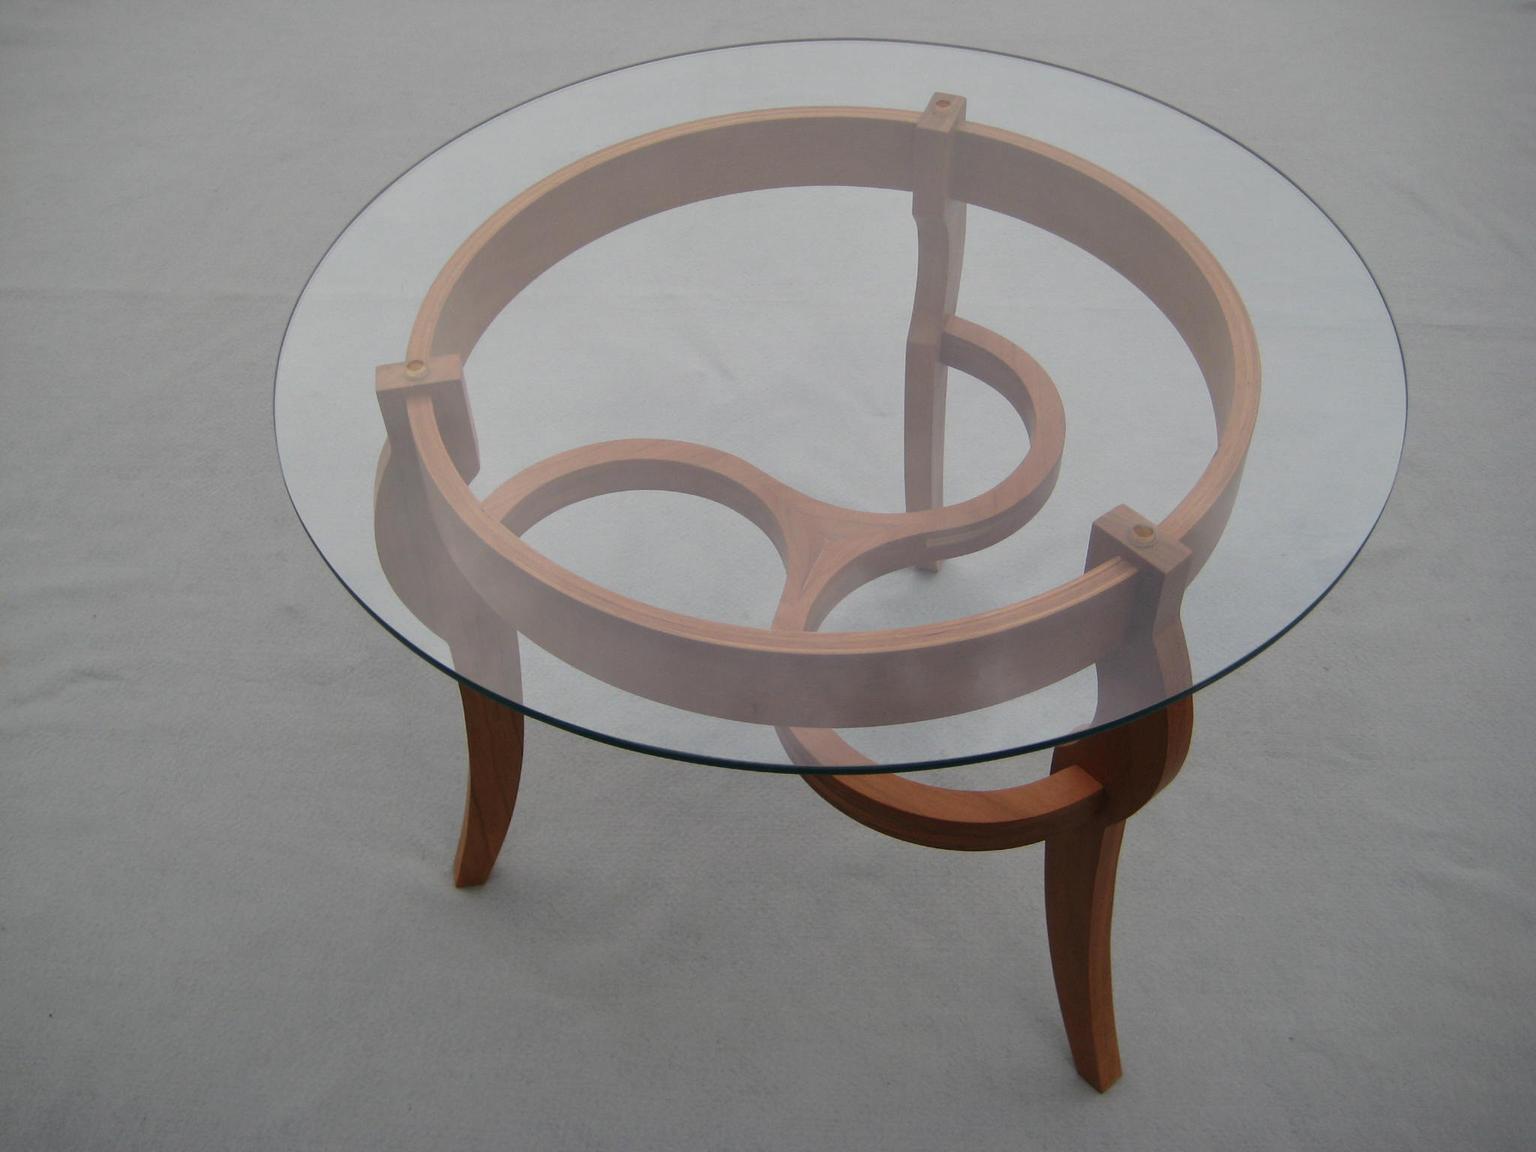 Image for entry 'Celtic Trefoil Table'